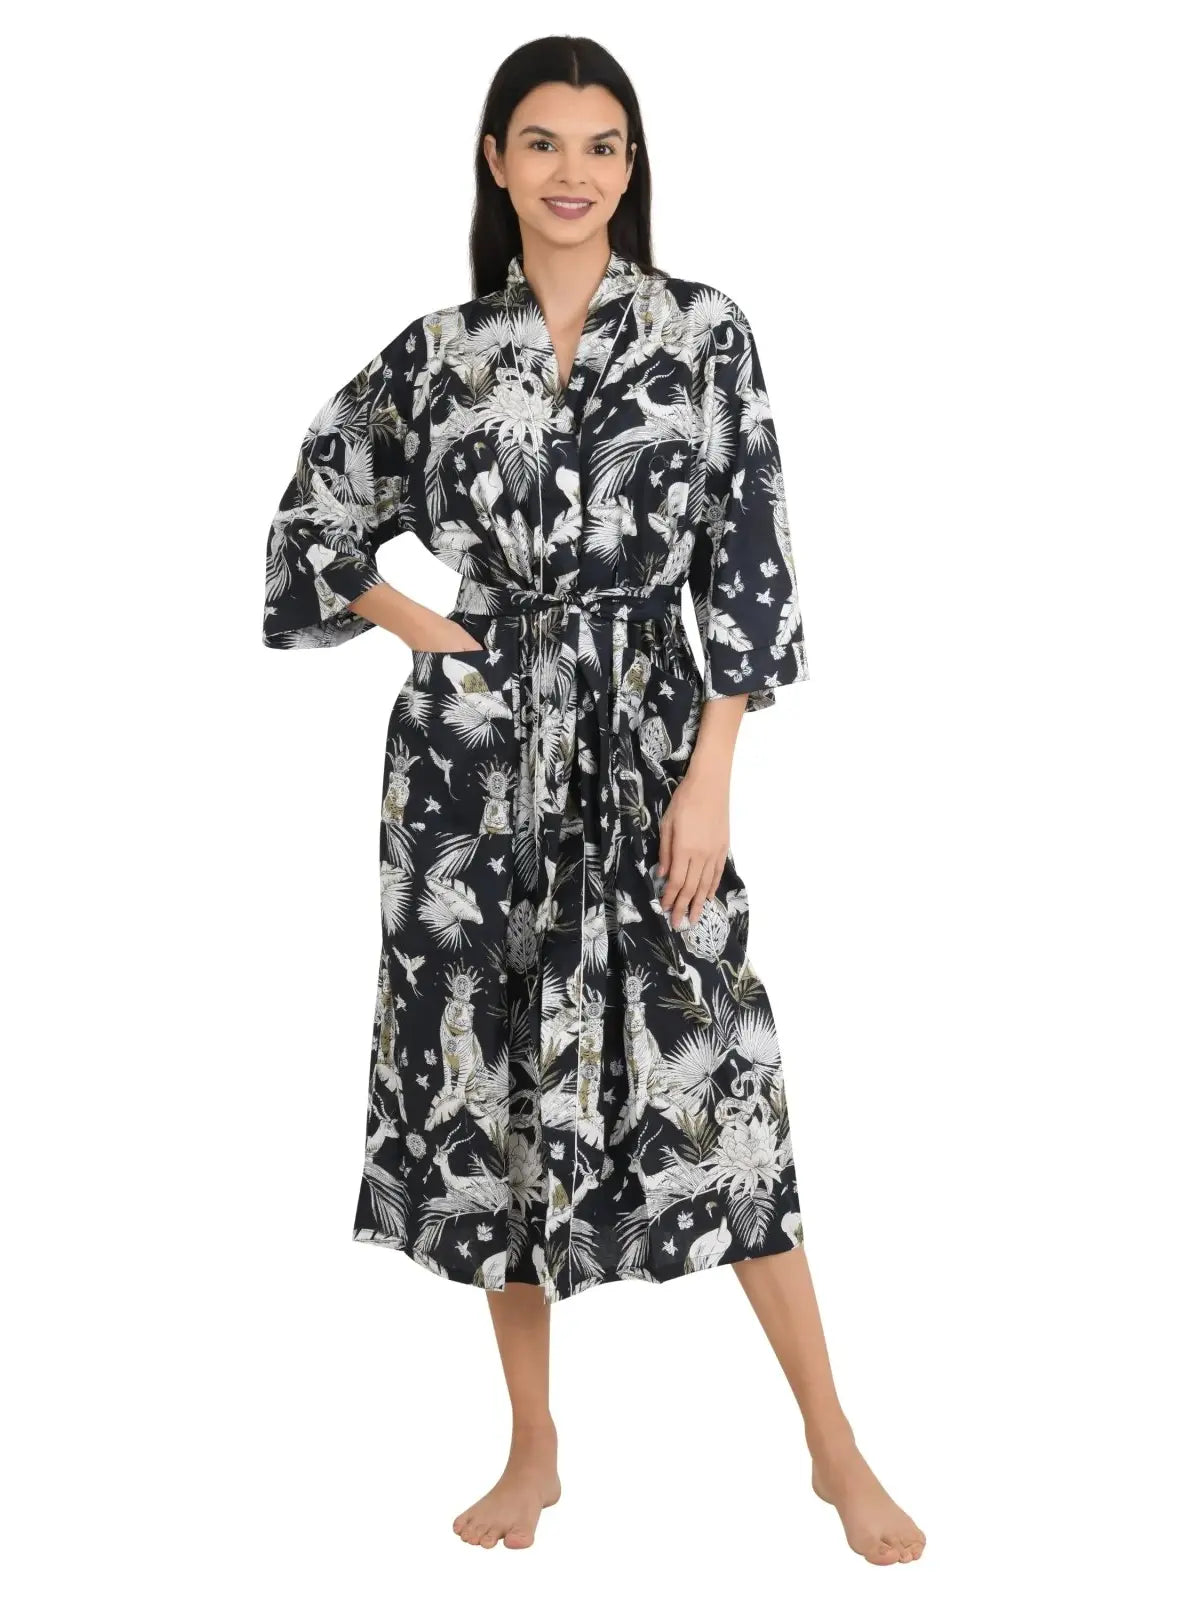 Boho Cotton Kimono House Robe Indian Handprinted Jungle Print Pattern | Lightweight Summer Luxury Beach Holidays Yacht Cover Up Stunning Dress